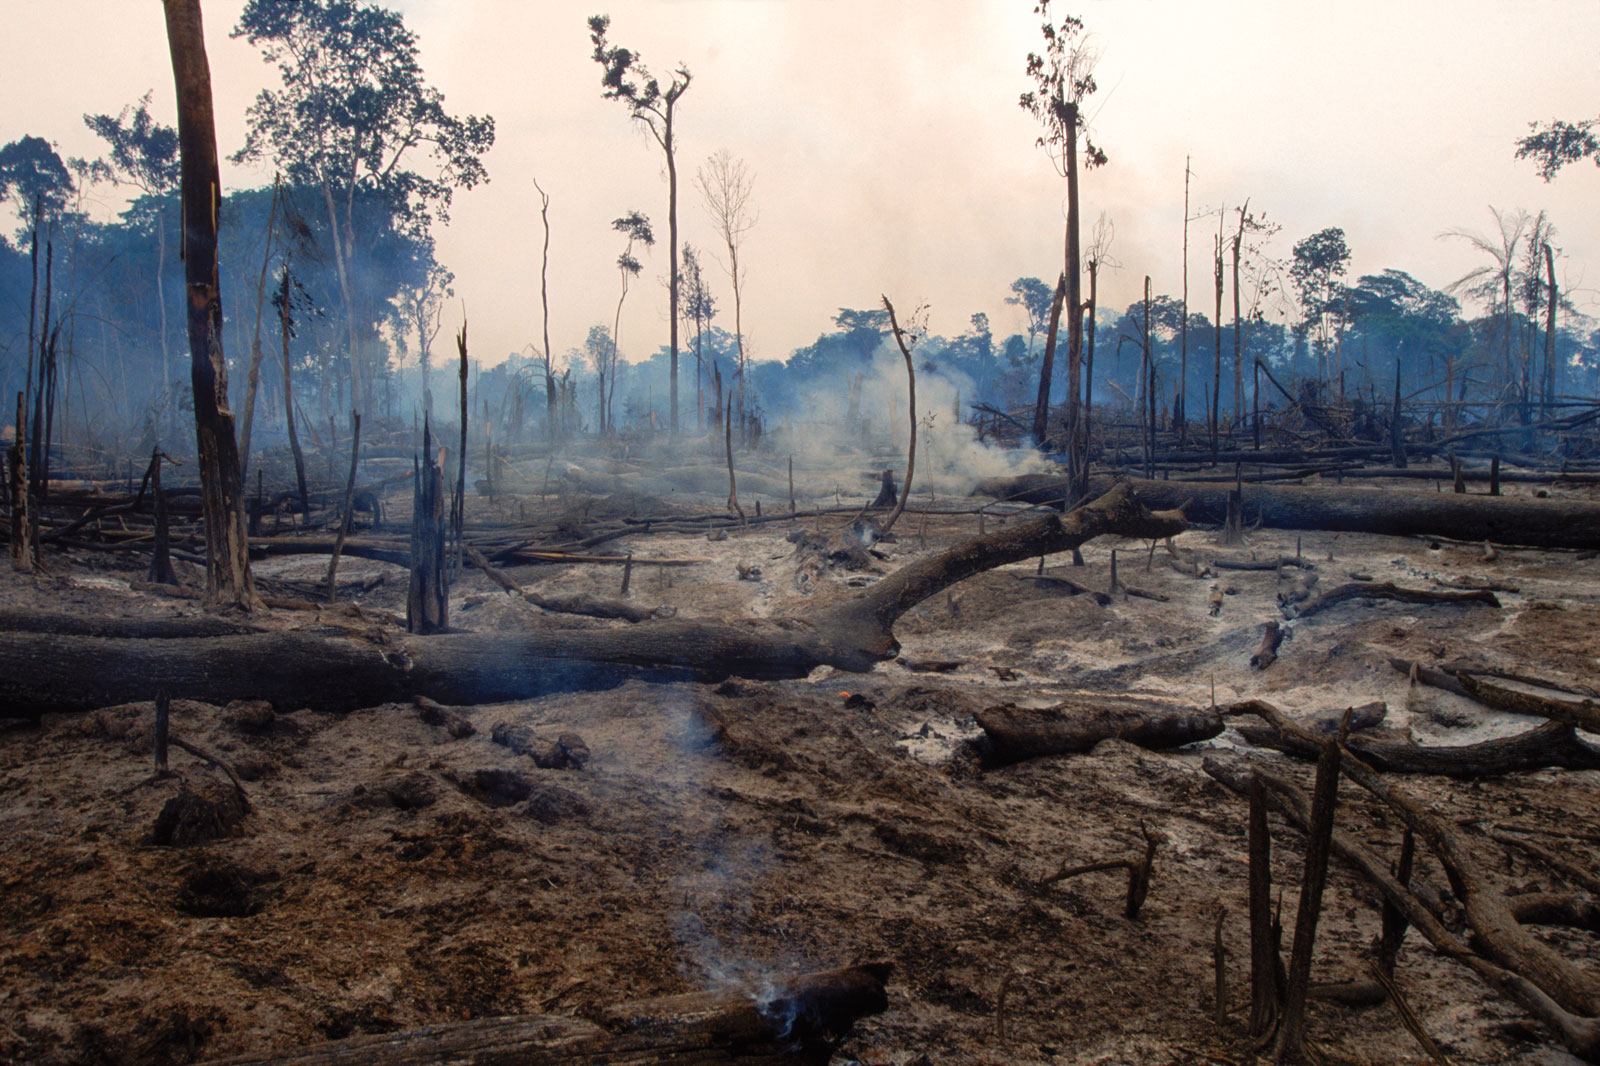 deforestation-of-the-brazilian-amazon-rainforest-has-increased-almost-sixfold